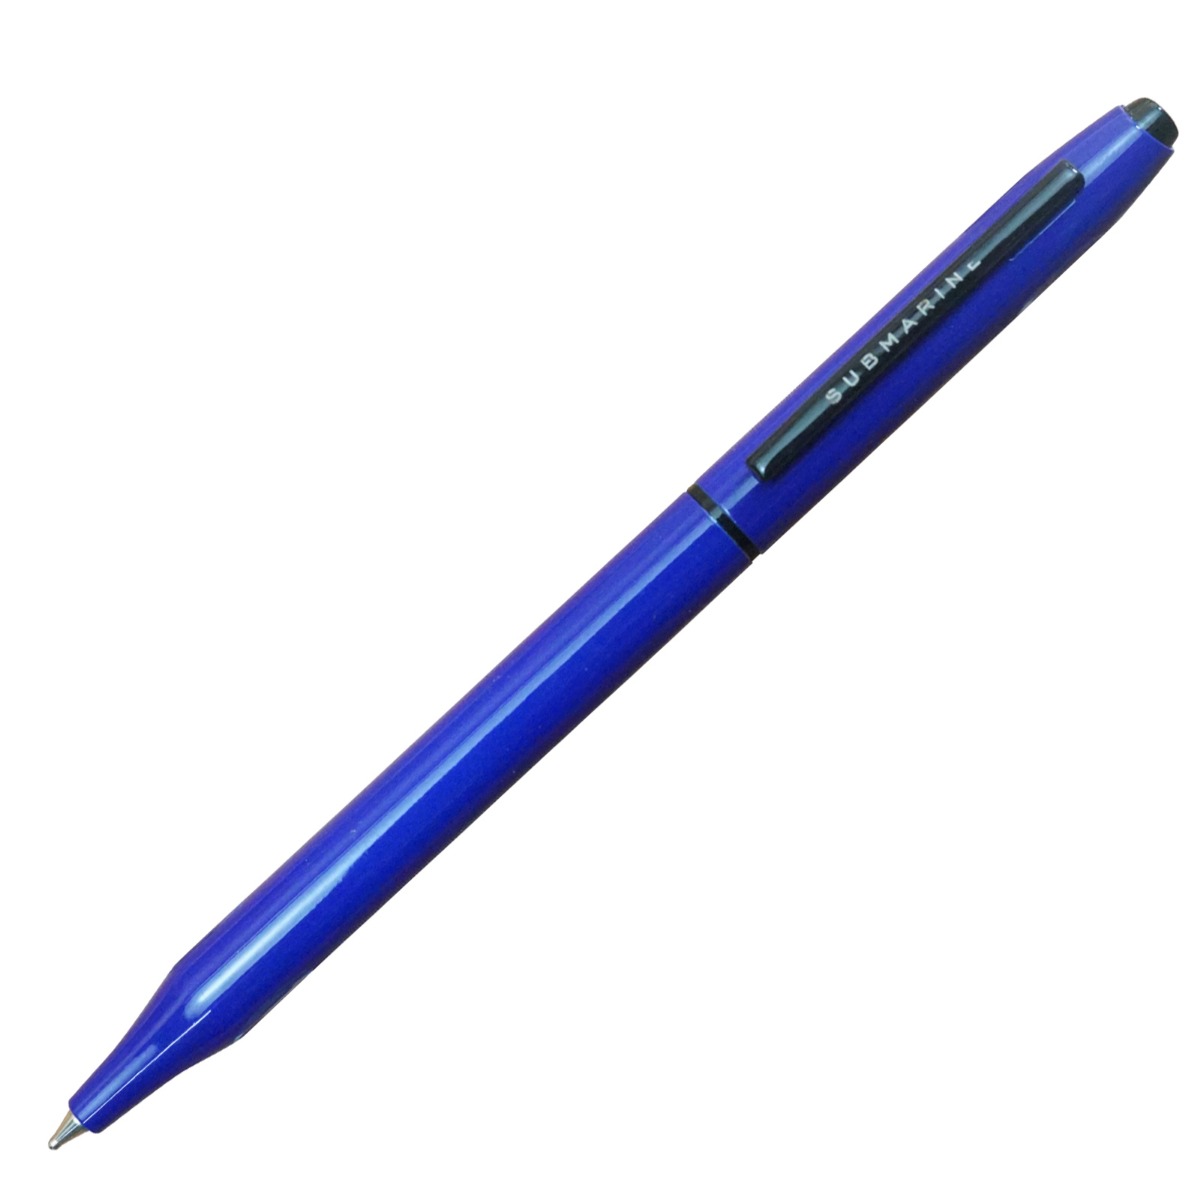 Submarine 922 Model:17349  Slim Dark Blue  Color  Body With Black Color Clip  Fine Tip  Twist  Type  Ball Pen 